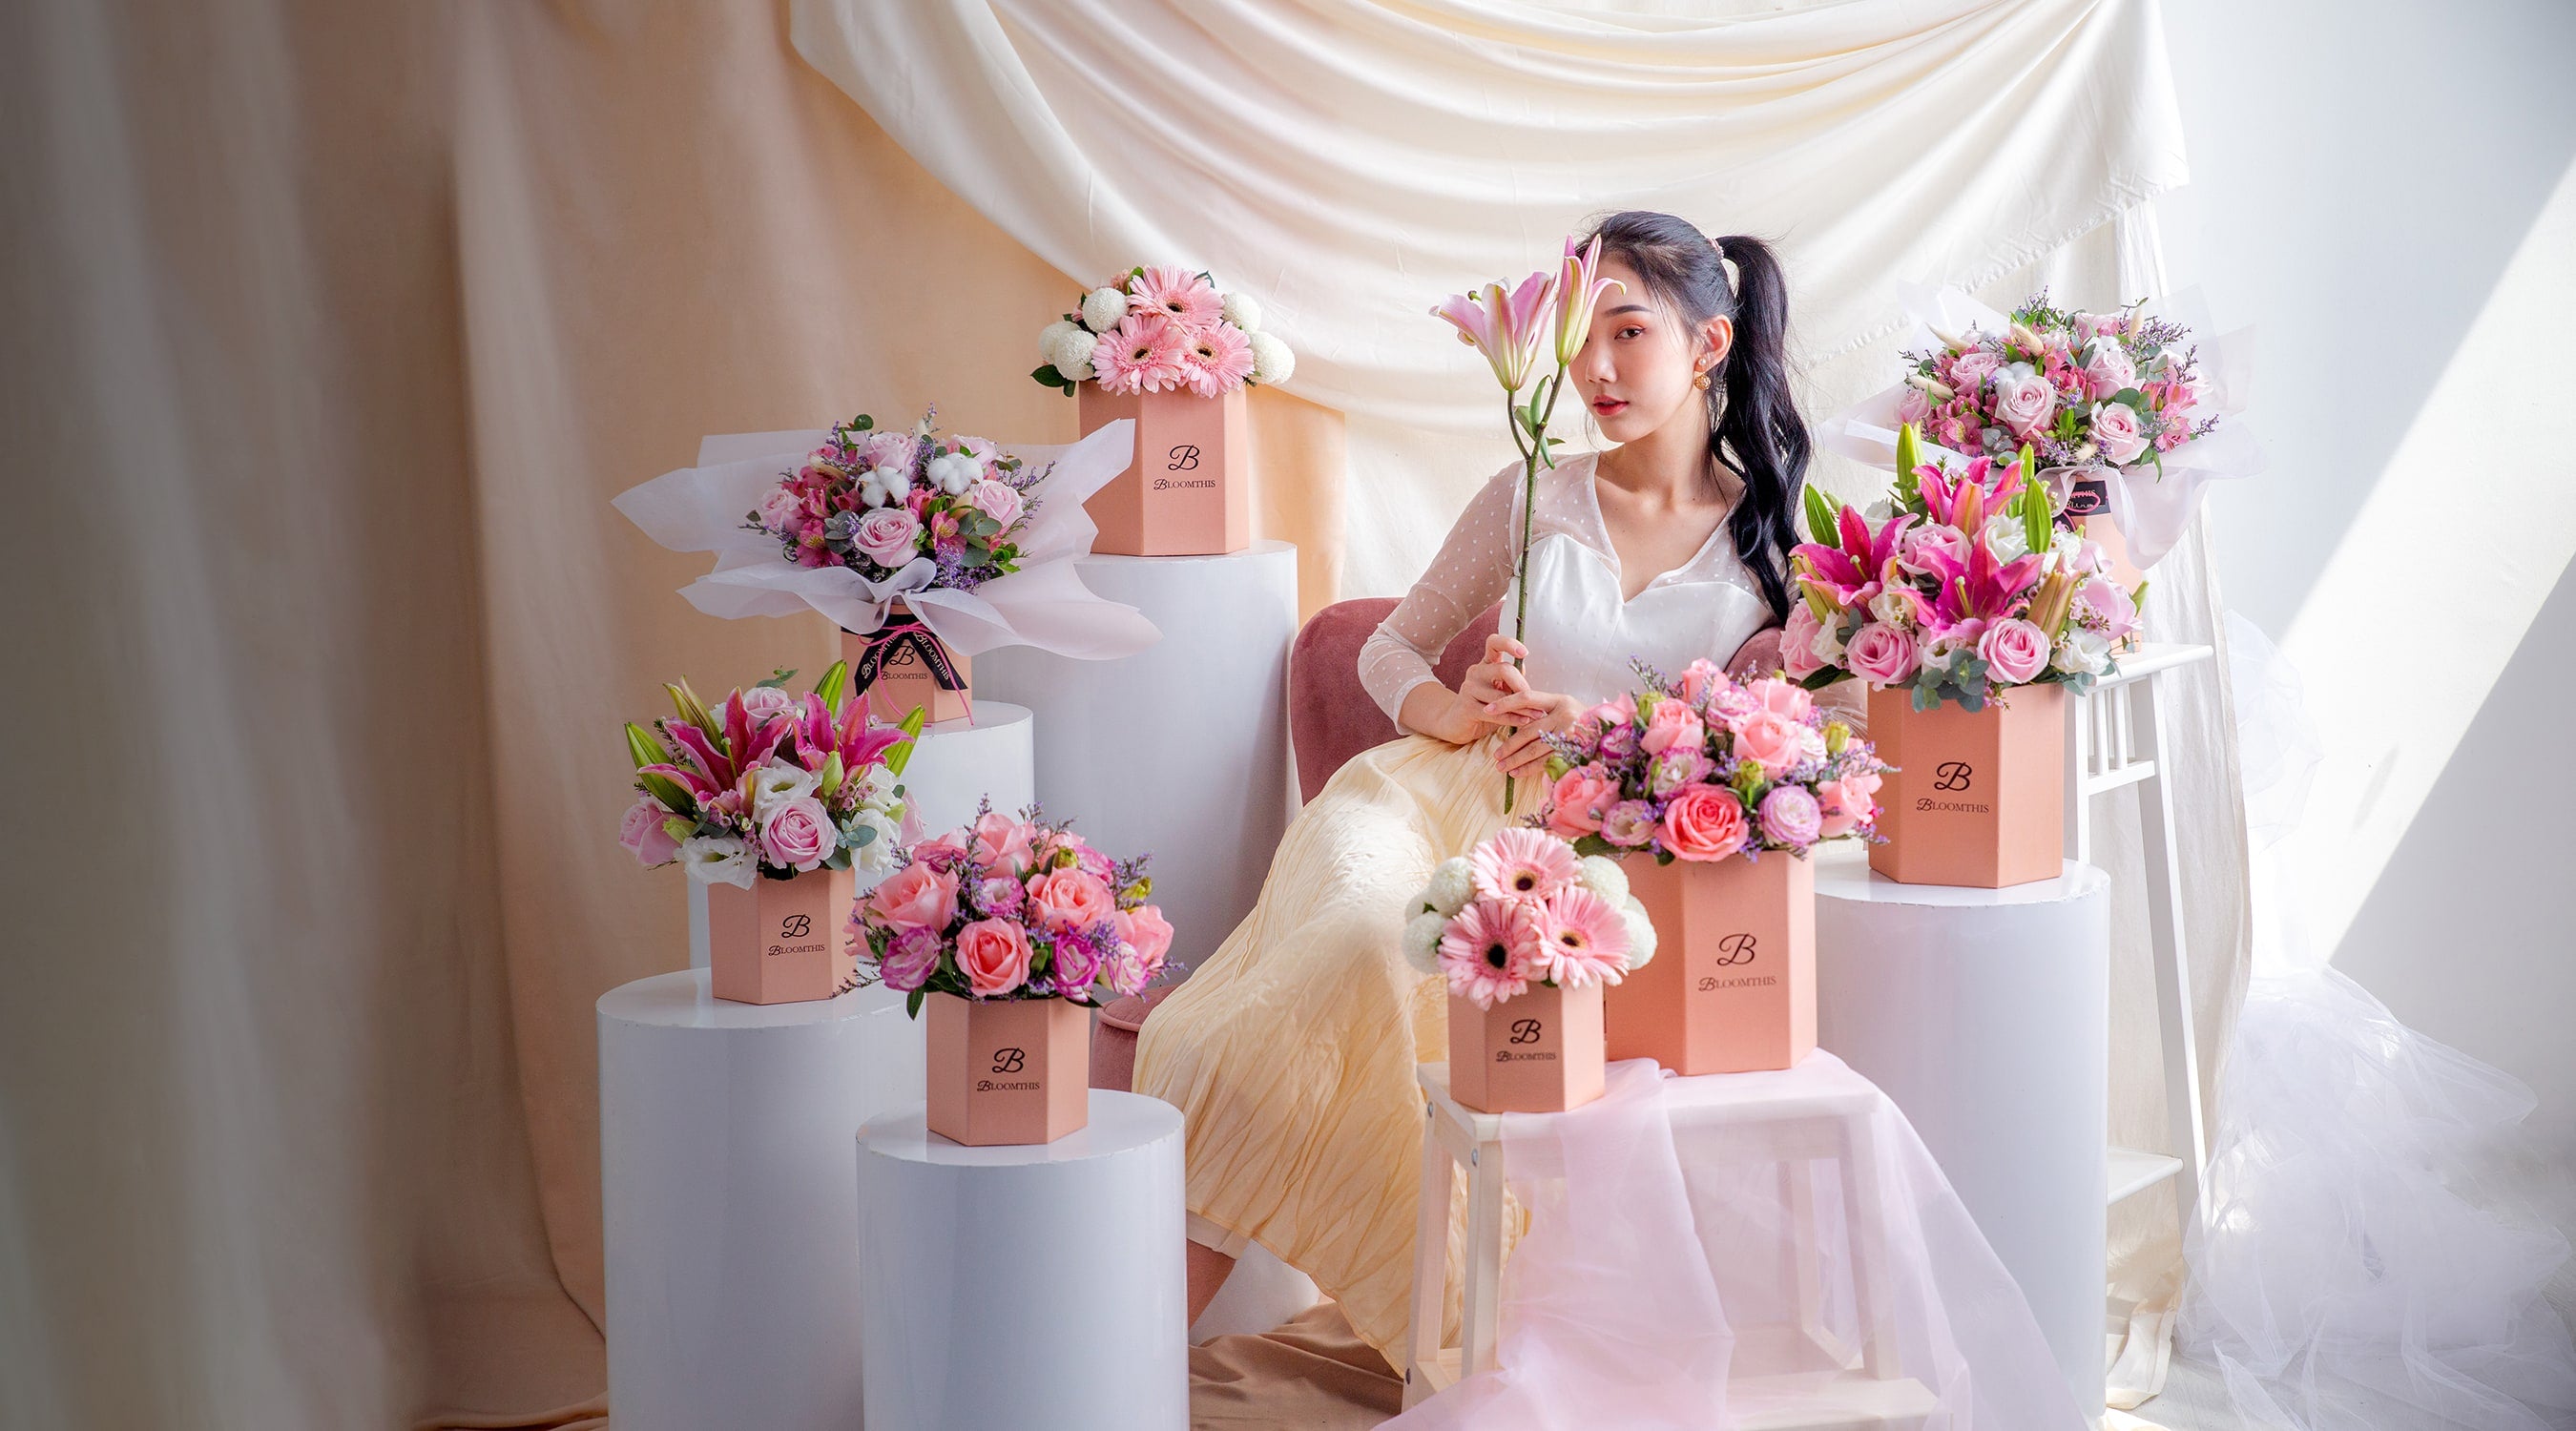 BloomThis designer flowers & gifts with free same-day delivery in KL, Selangor, Penang & Johor Bahru